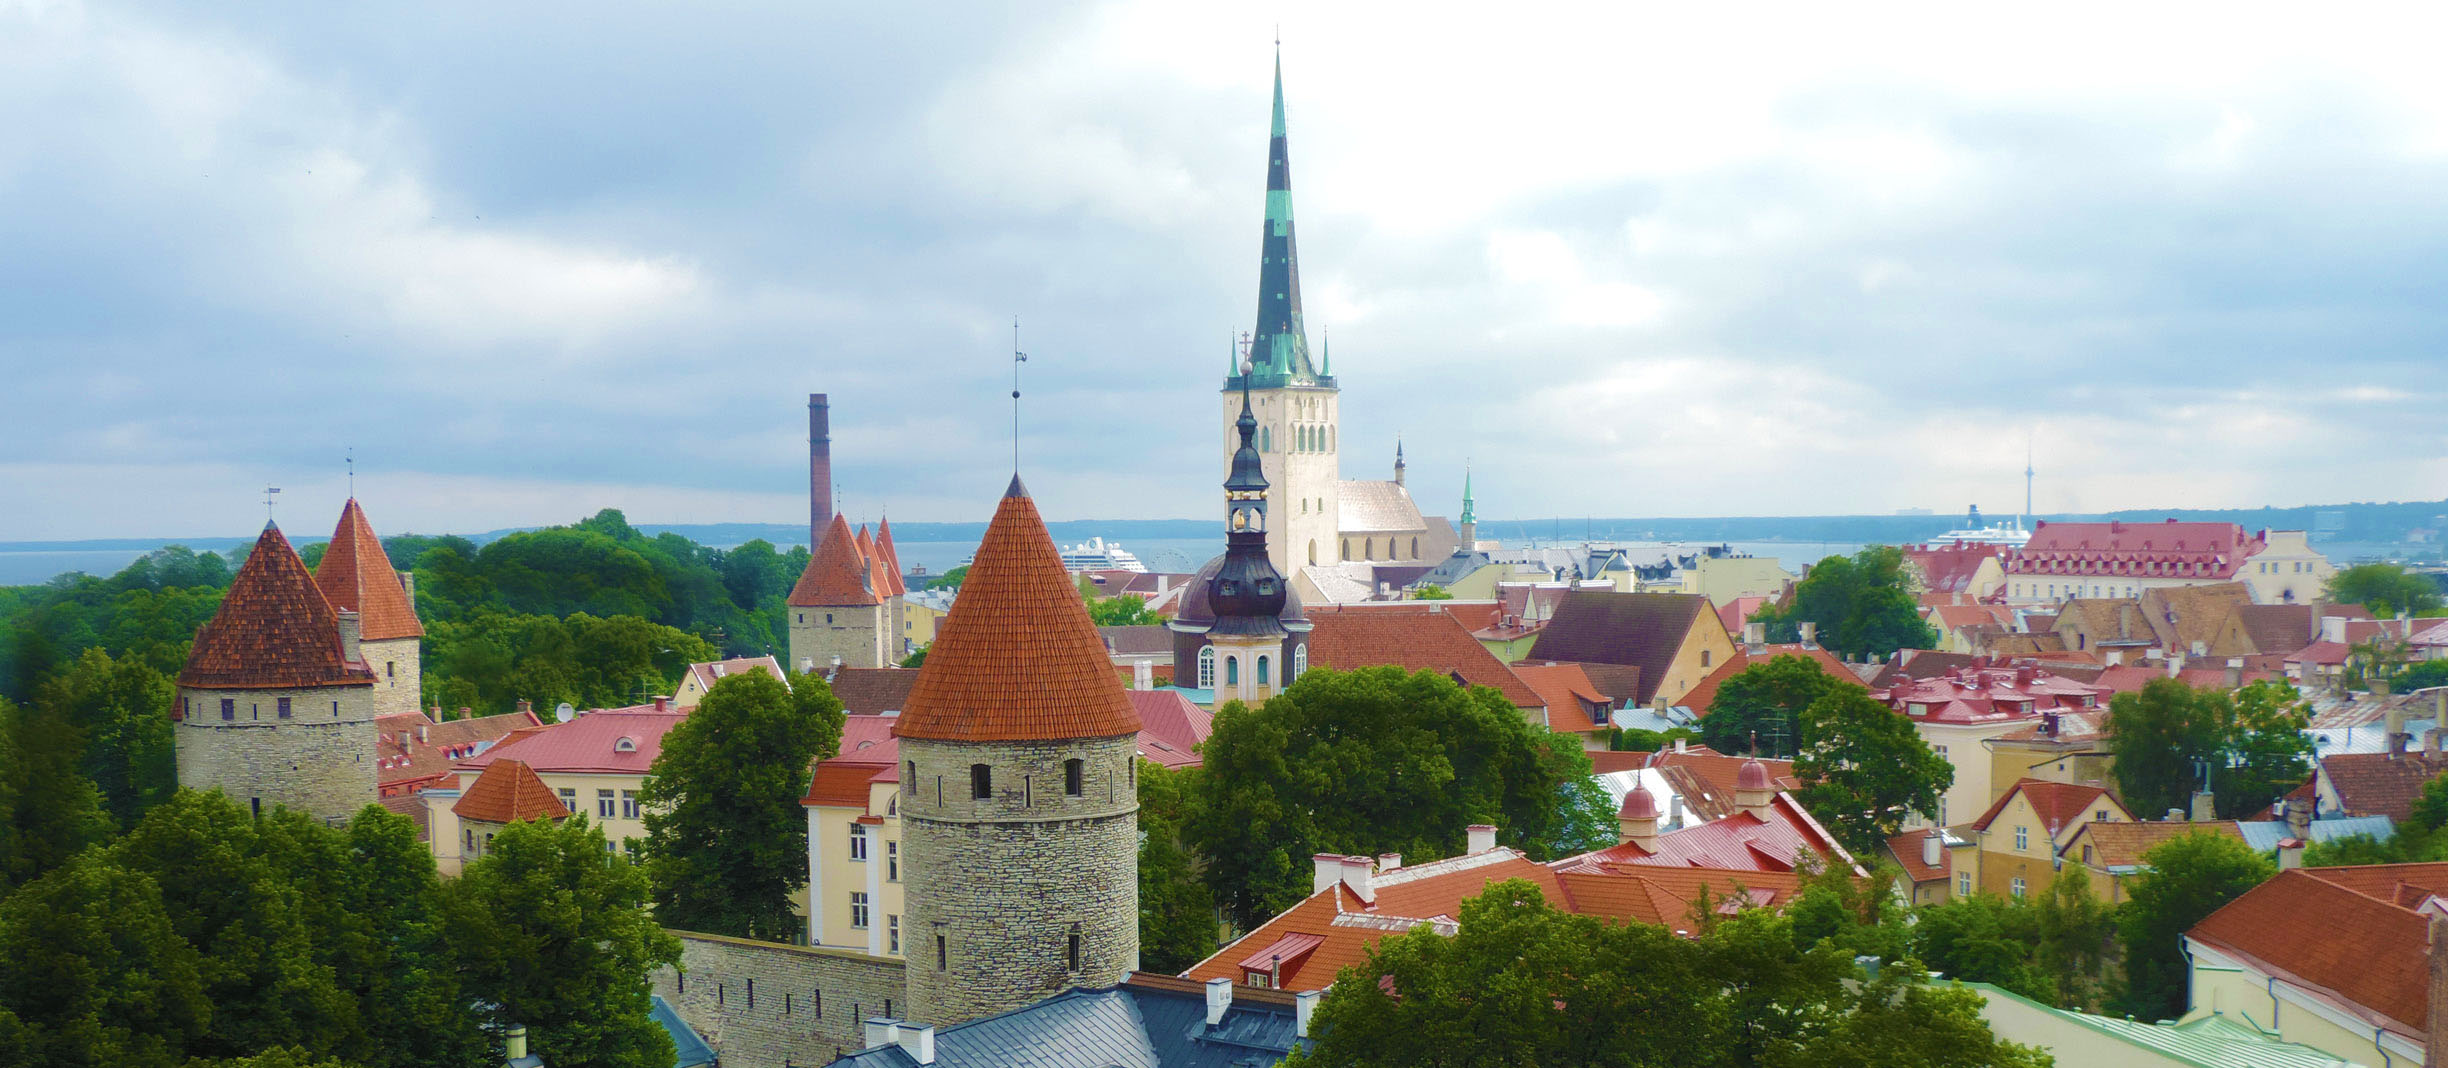 CAPA 1 - Tallinn, o berço da Estônia